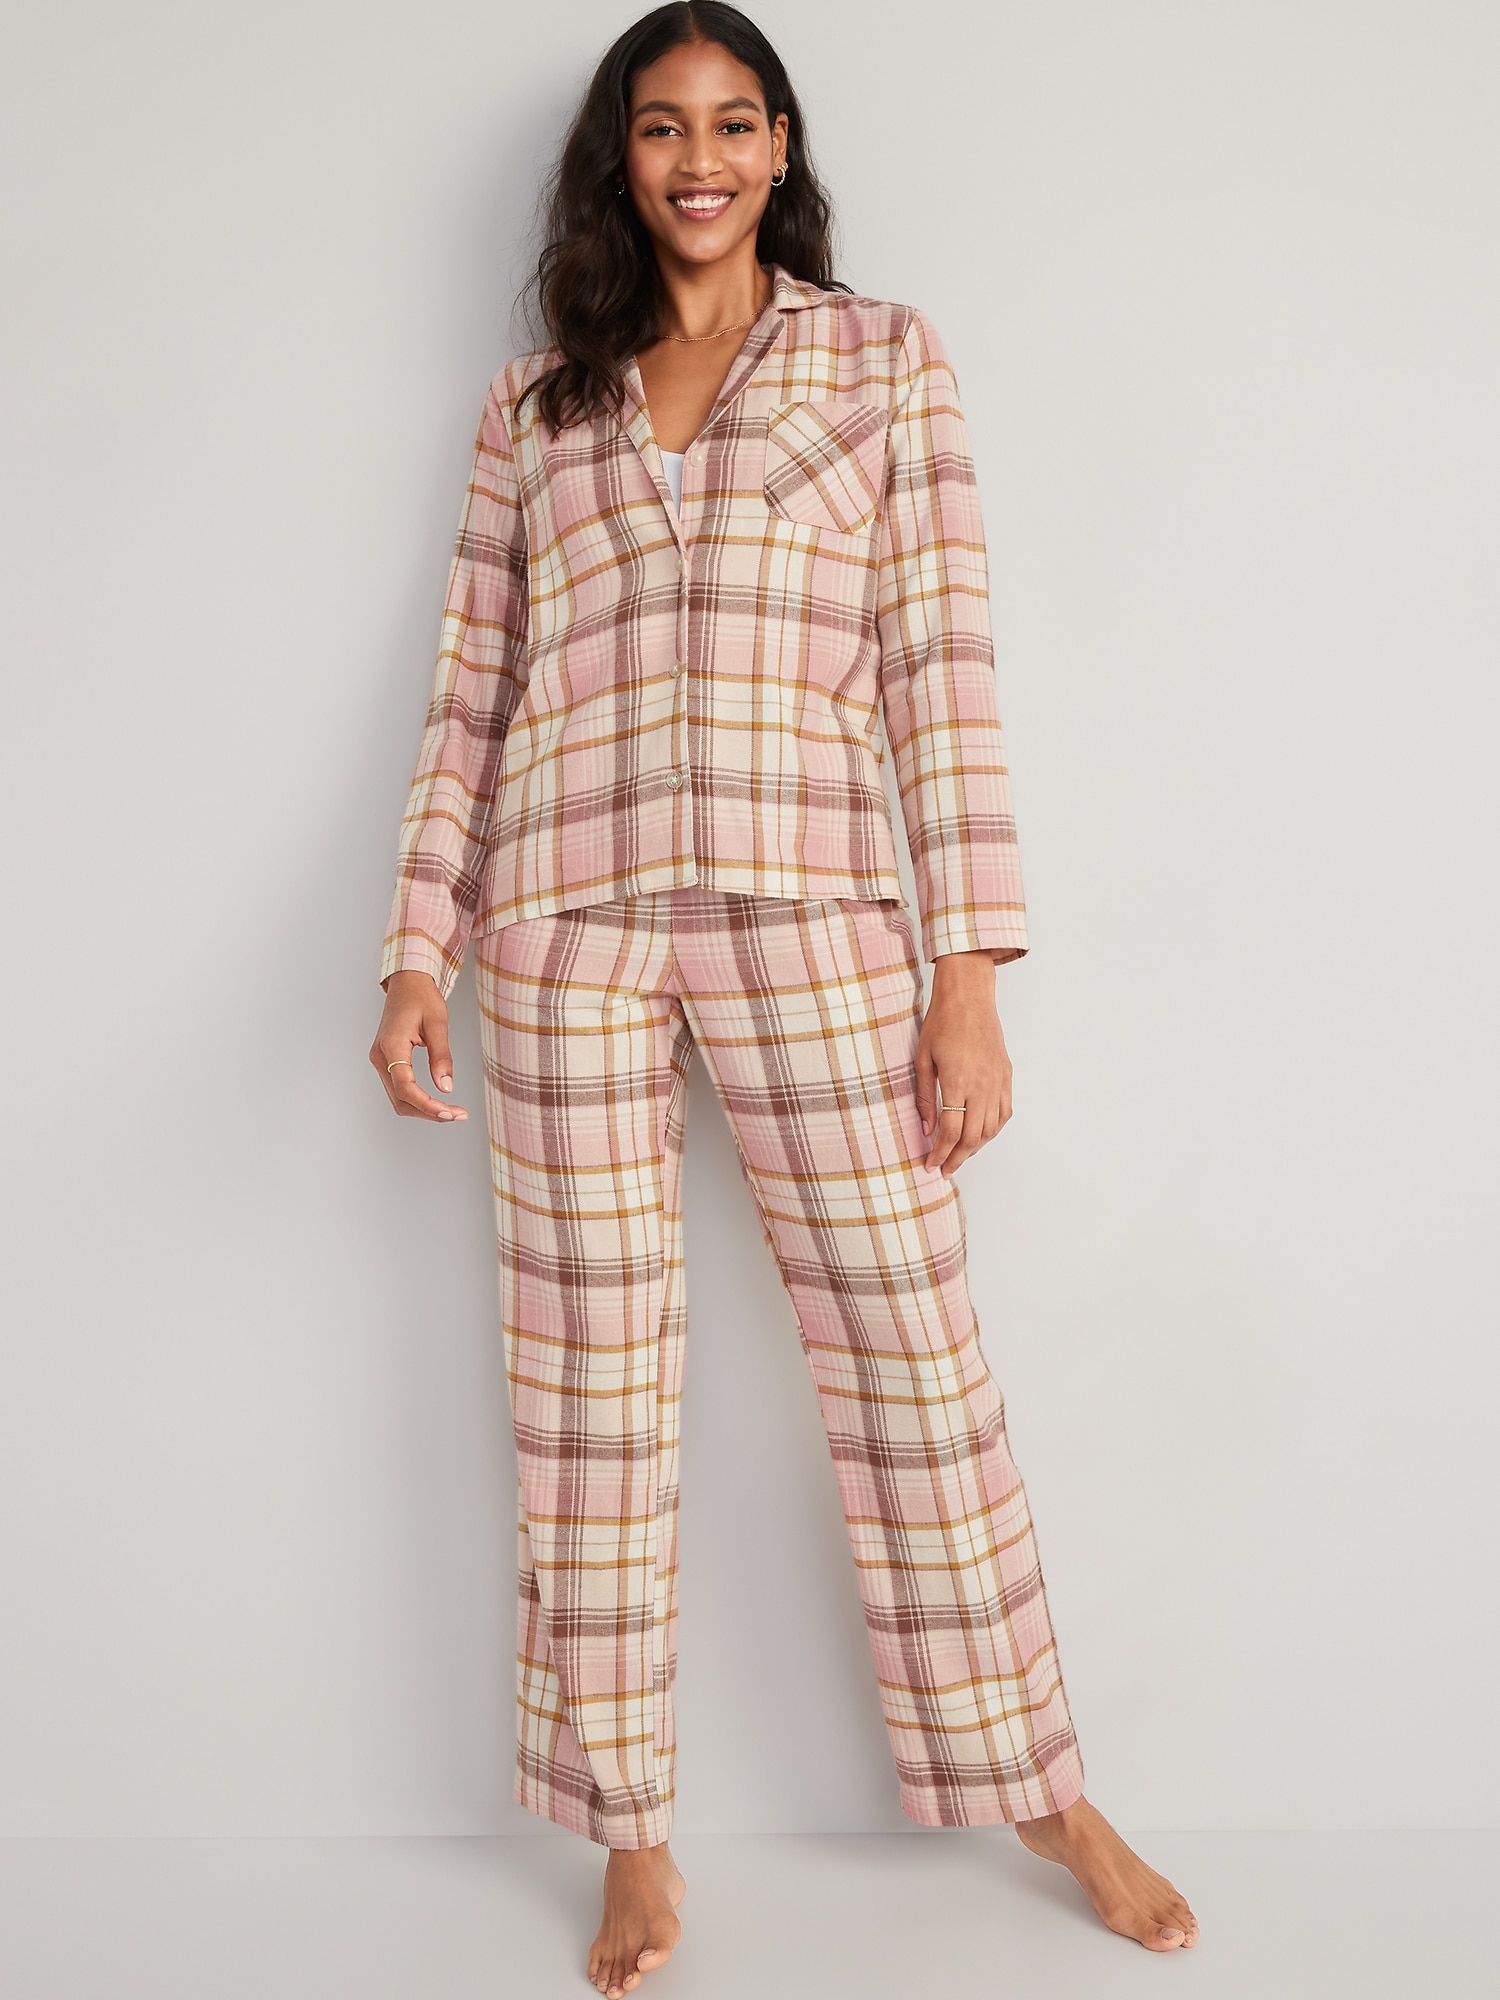 Women's Flannel Pajama Set in Navy Gingham